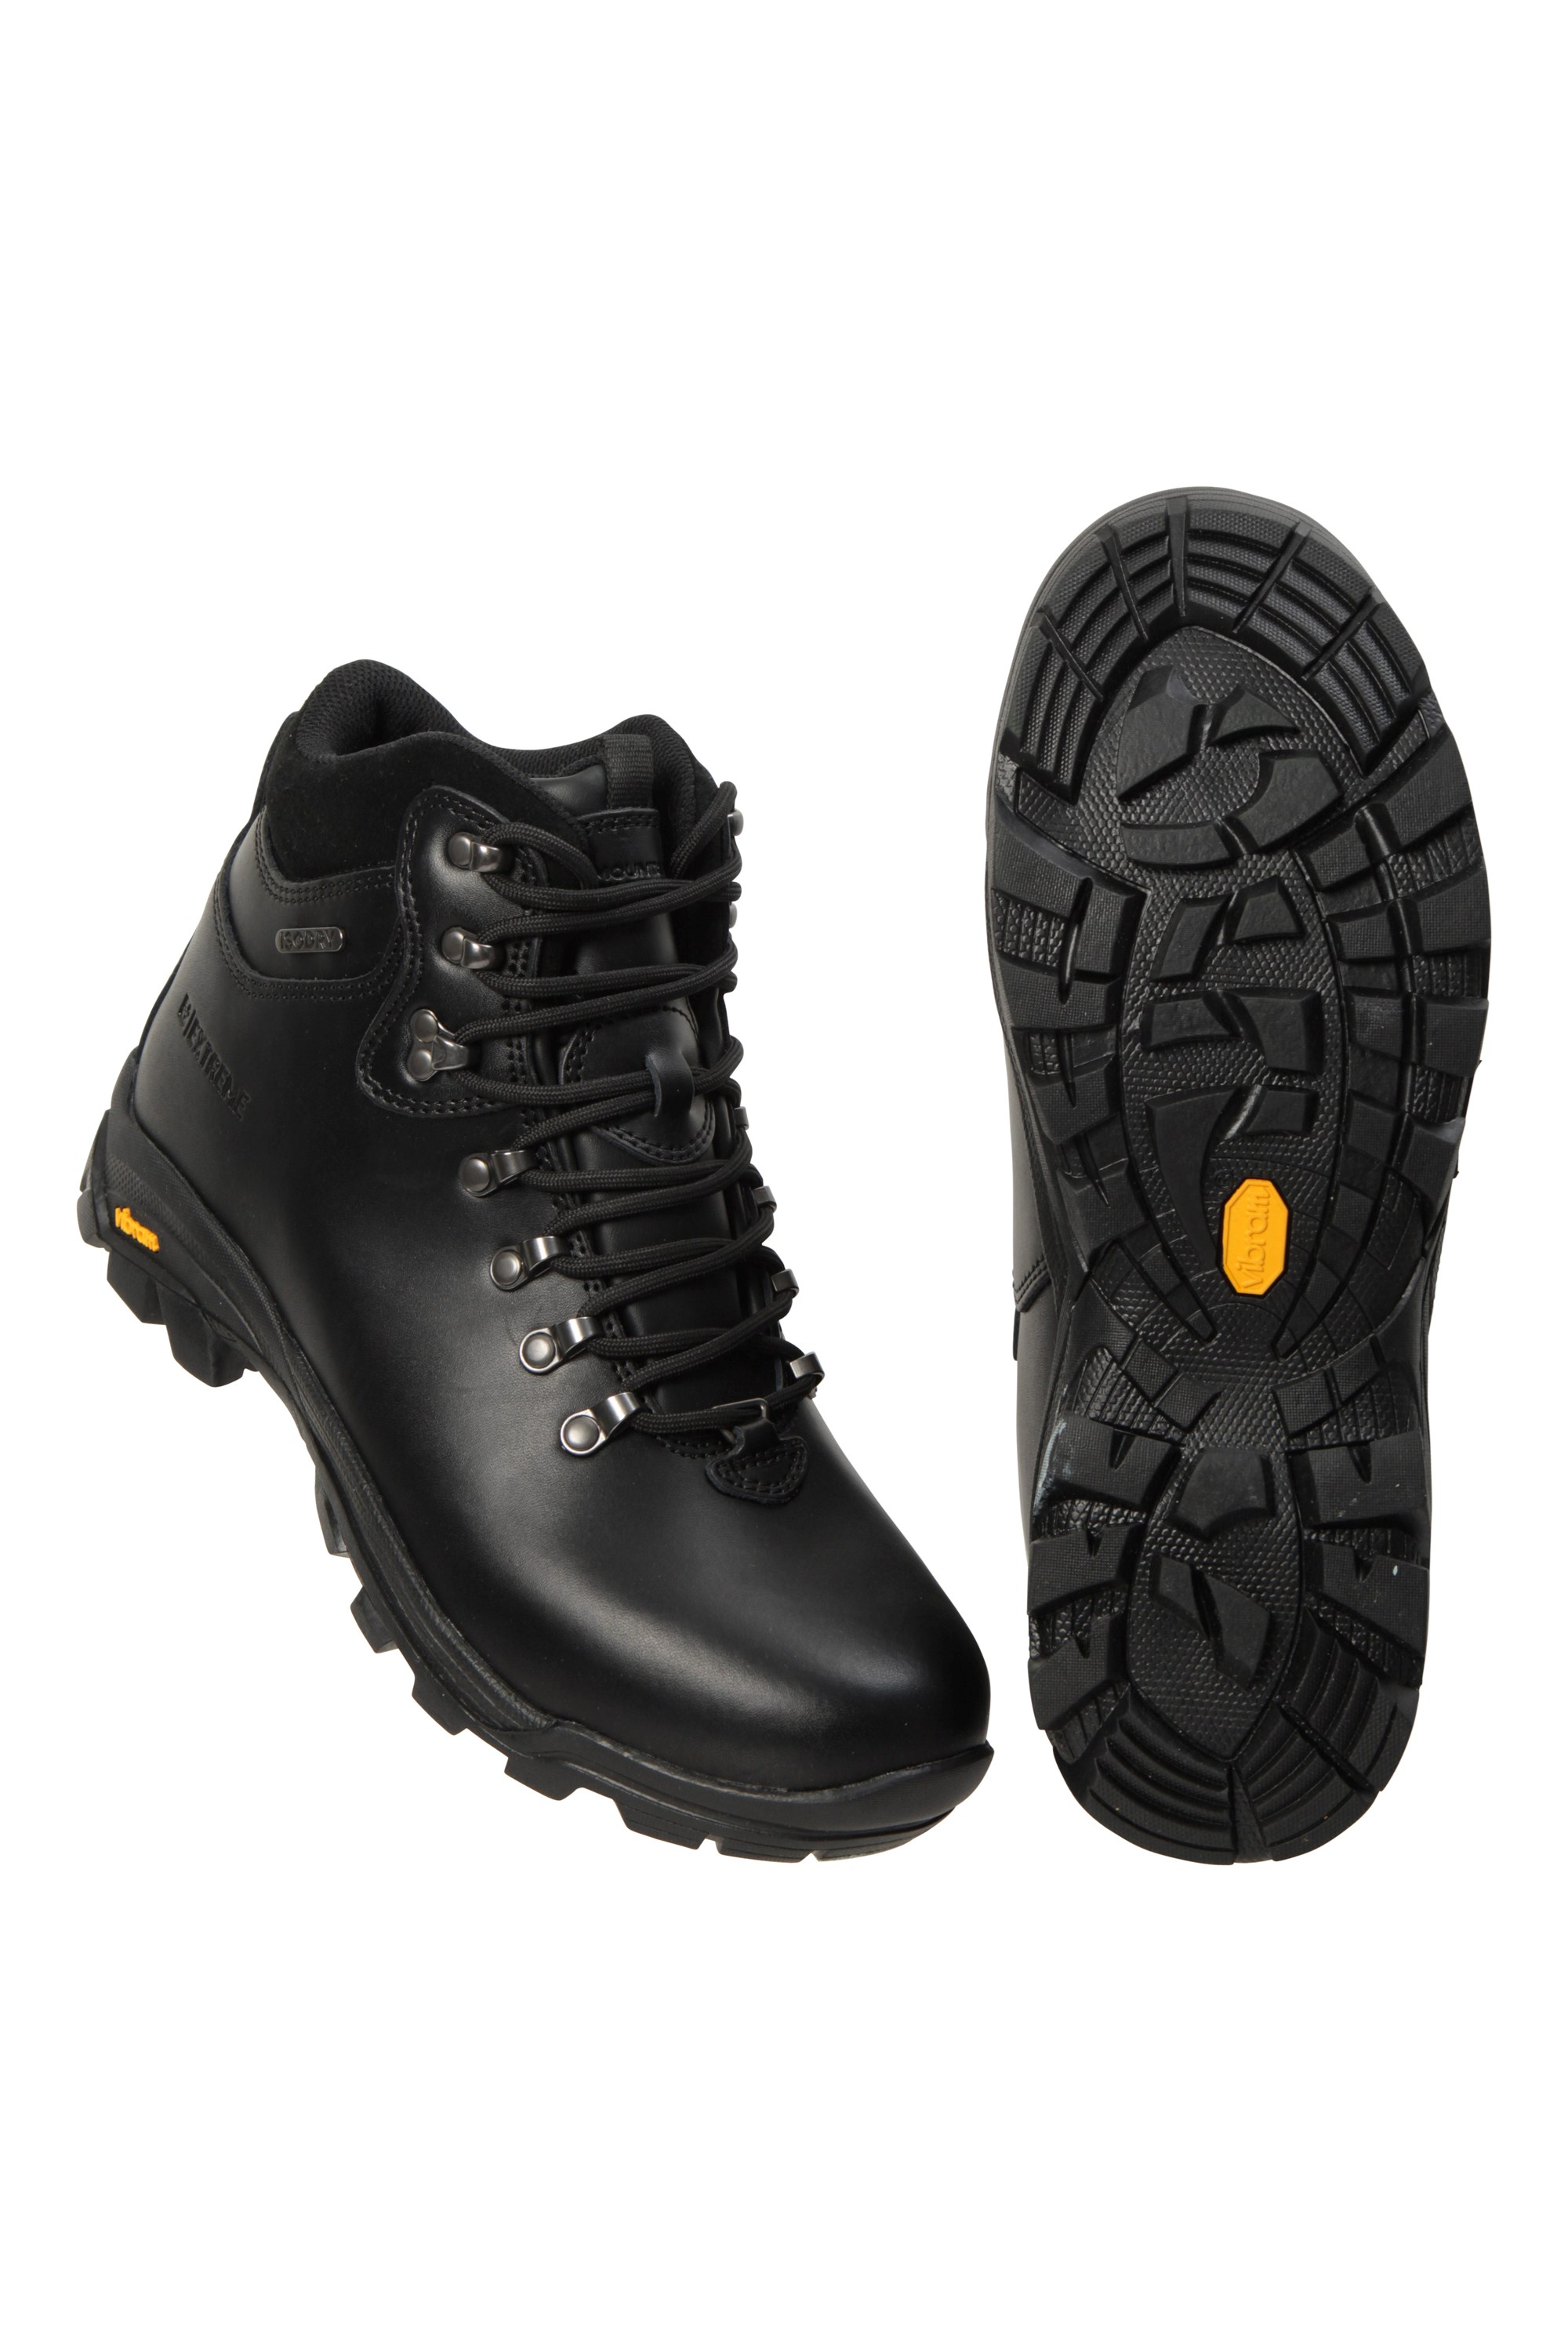 Latitude Extreme Mens Leather Waterproof Walking Boots - Black